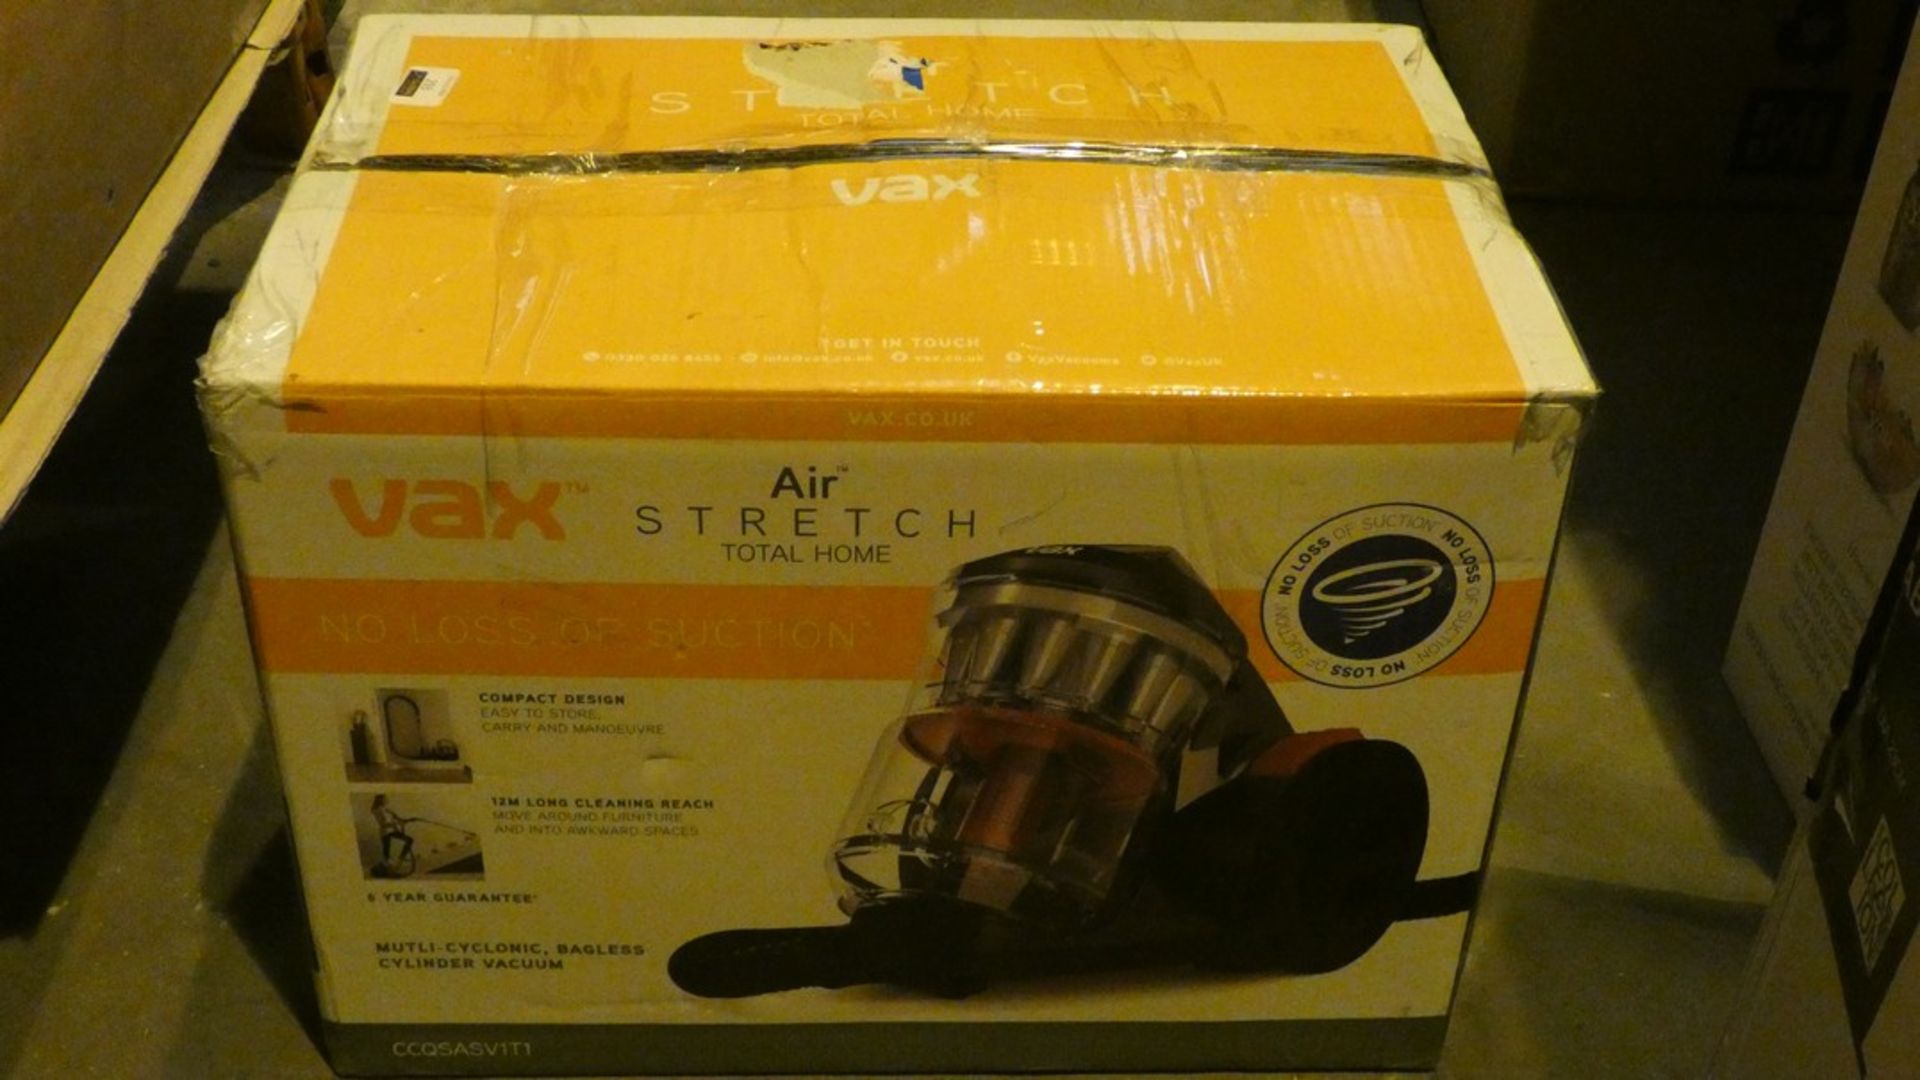 Boxed Vax Air Stretch Cyclinder Vacuum Cleaner RRP £100 (Customer Return)